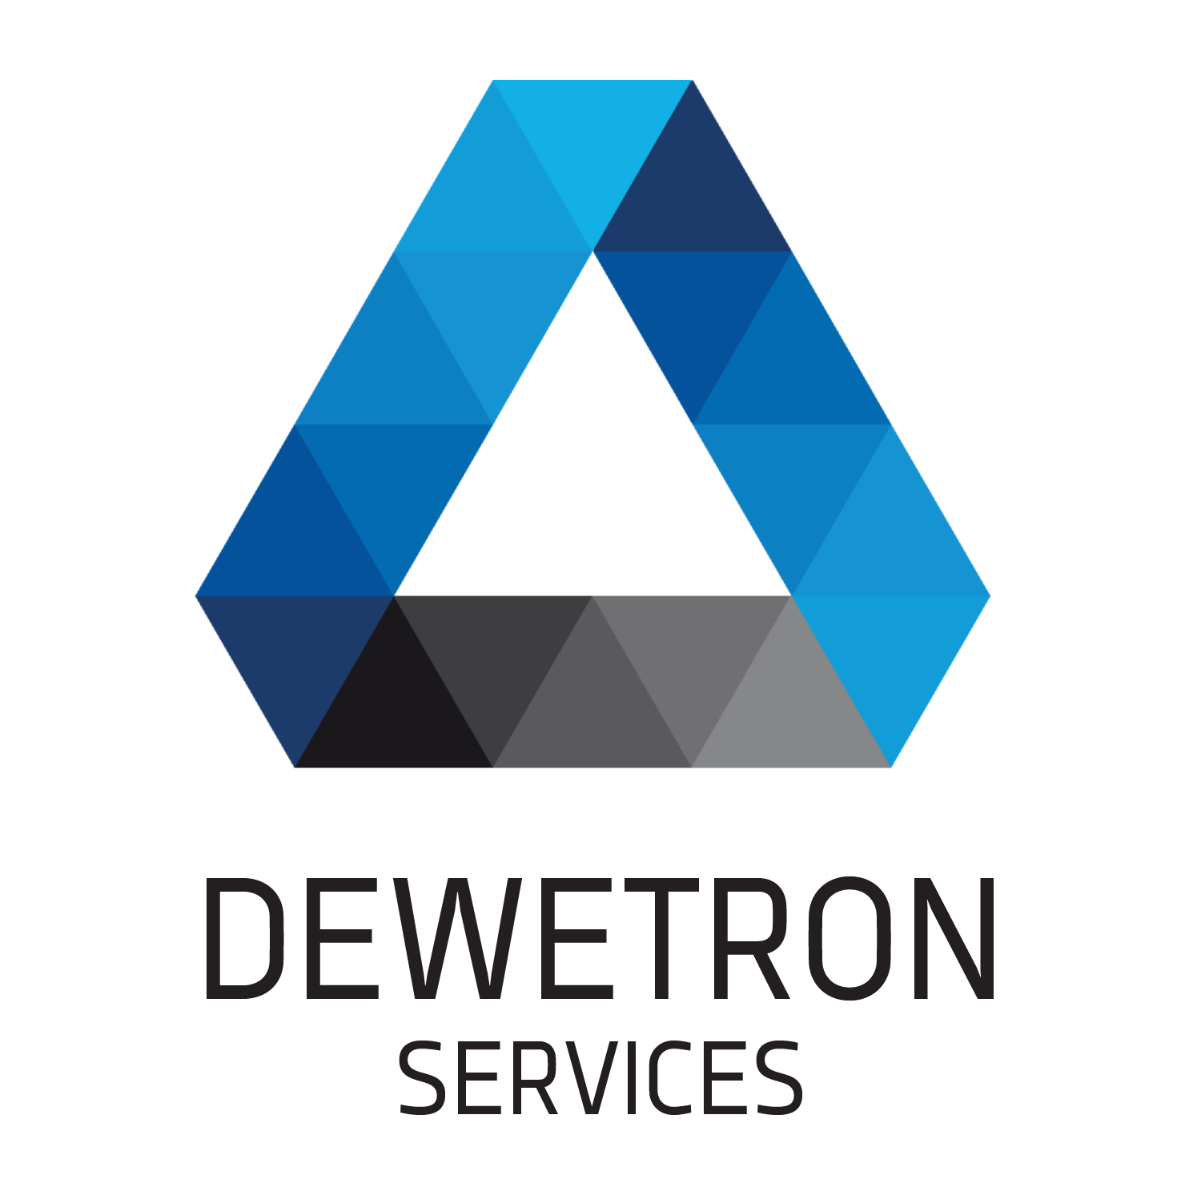 Dewetron Services